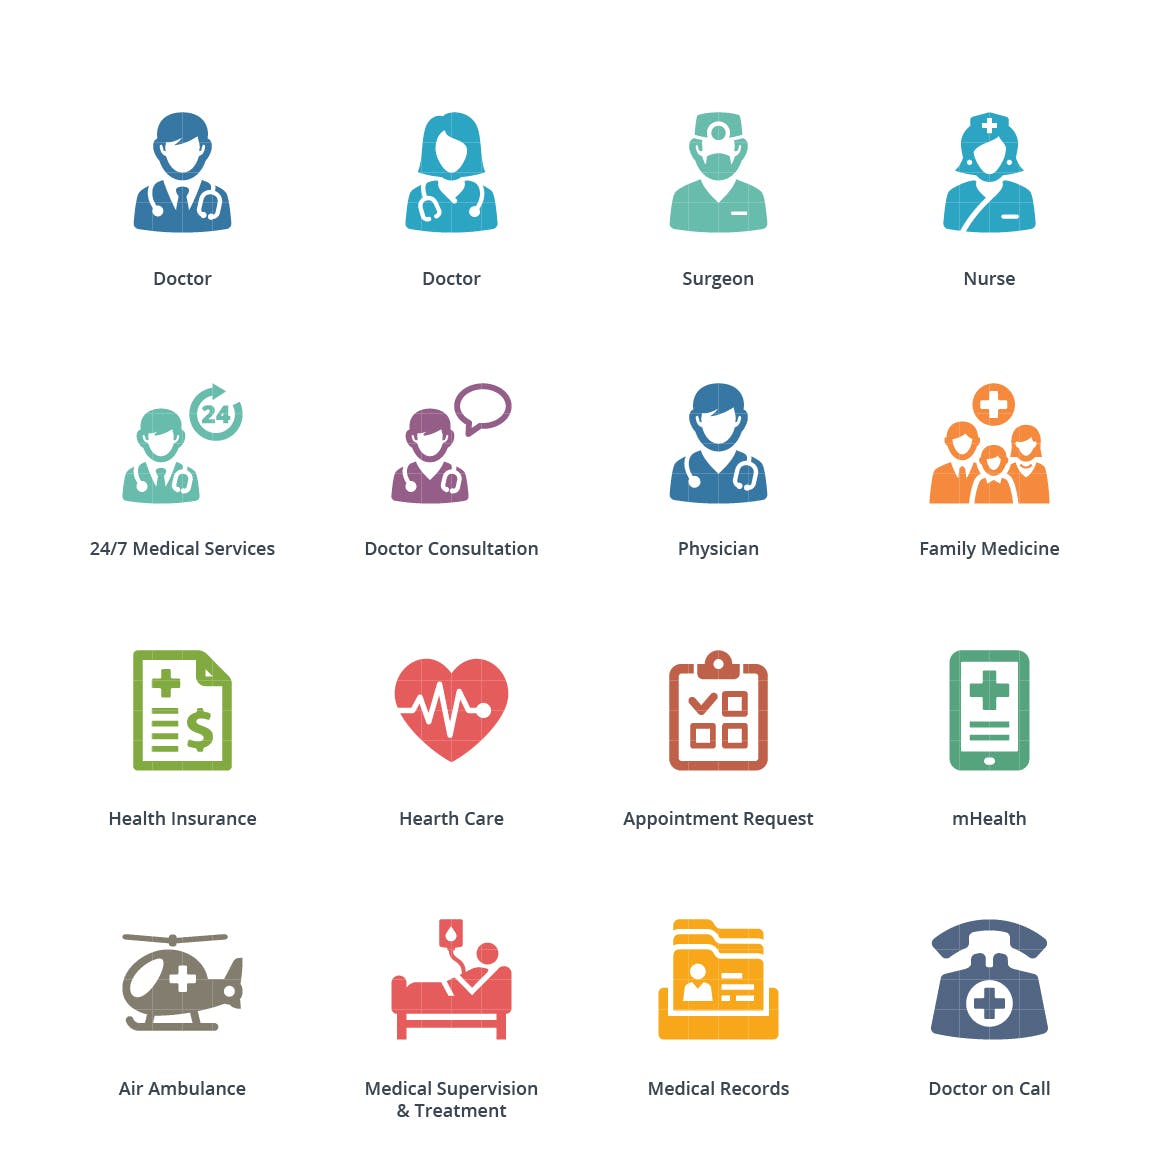 Sympa系列-医疗服务彩色素材库精选图标集v1 Colored Medical Services Icons Set 1- Sympa Series插图(1)